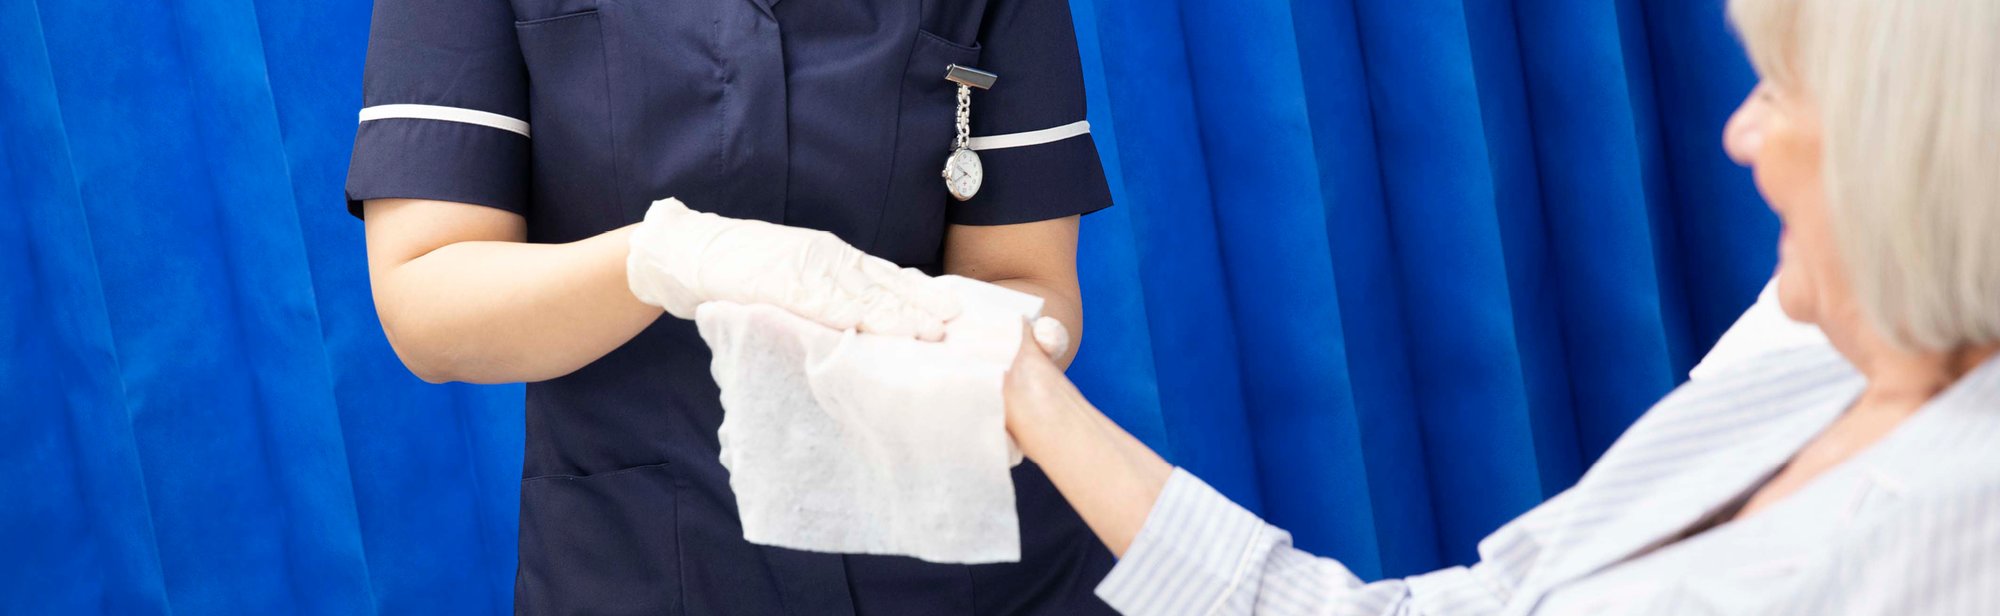 How do we improve patient hand hygiene?